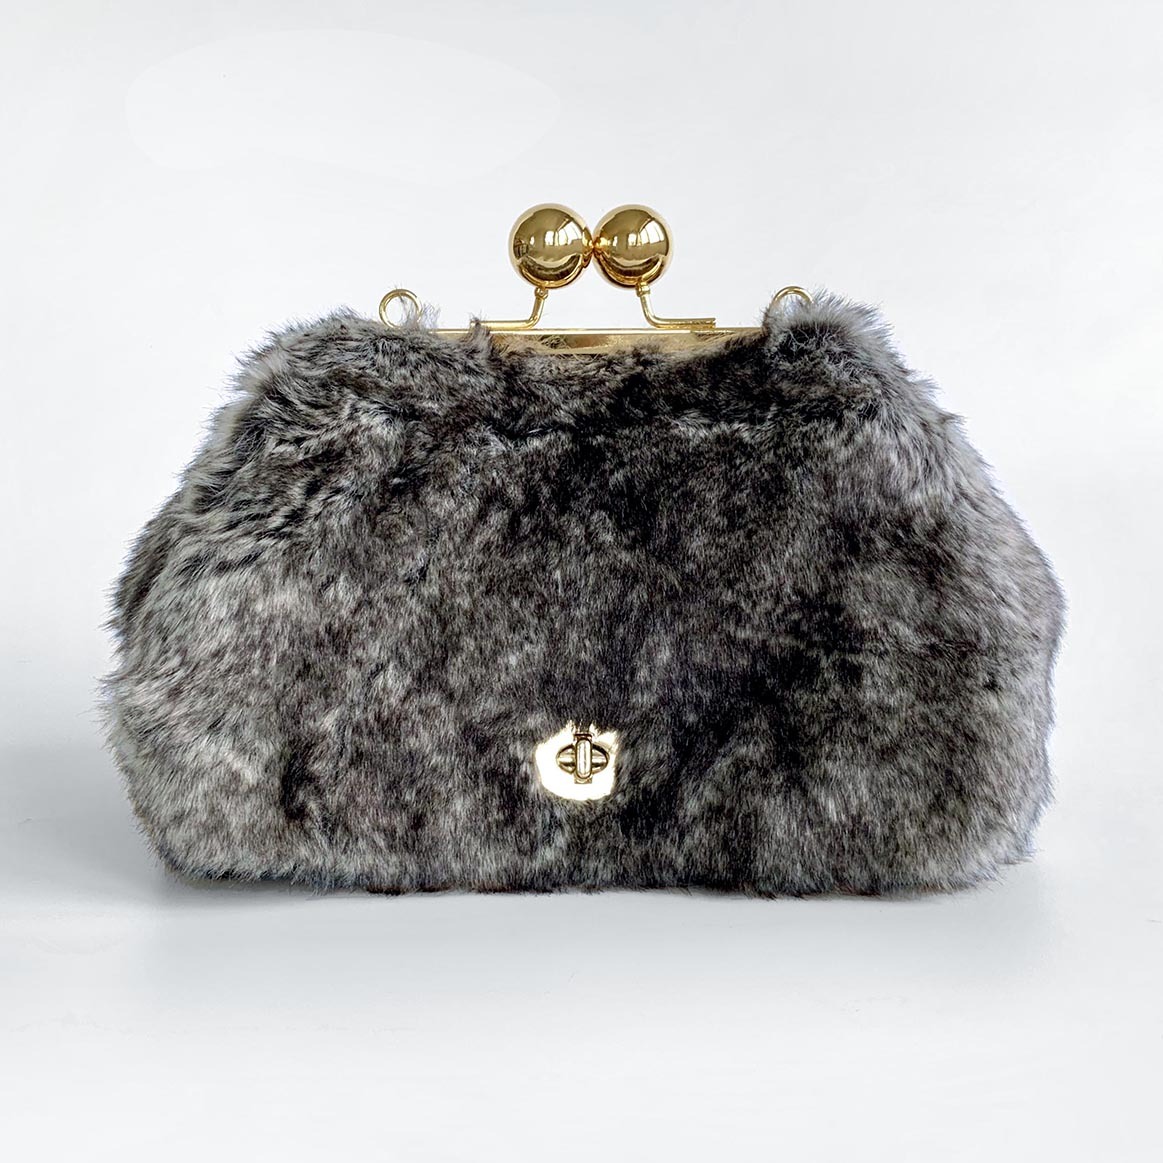 獺兔包 毛茸茸包包 灰皮草口金包 風后妃設計 Rex rabbit grey faux fur bag kiss lock pouch clip bag gamaguchi women gift lady gift